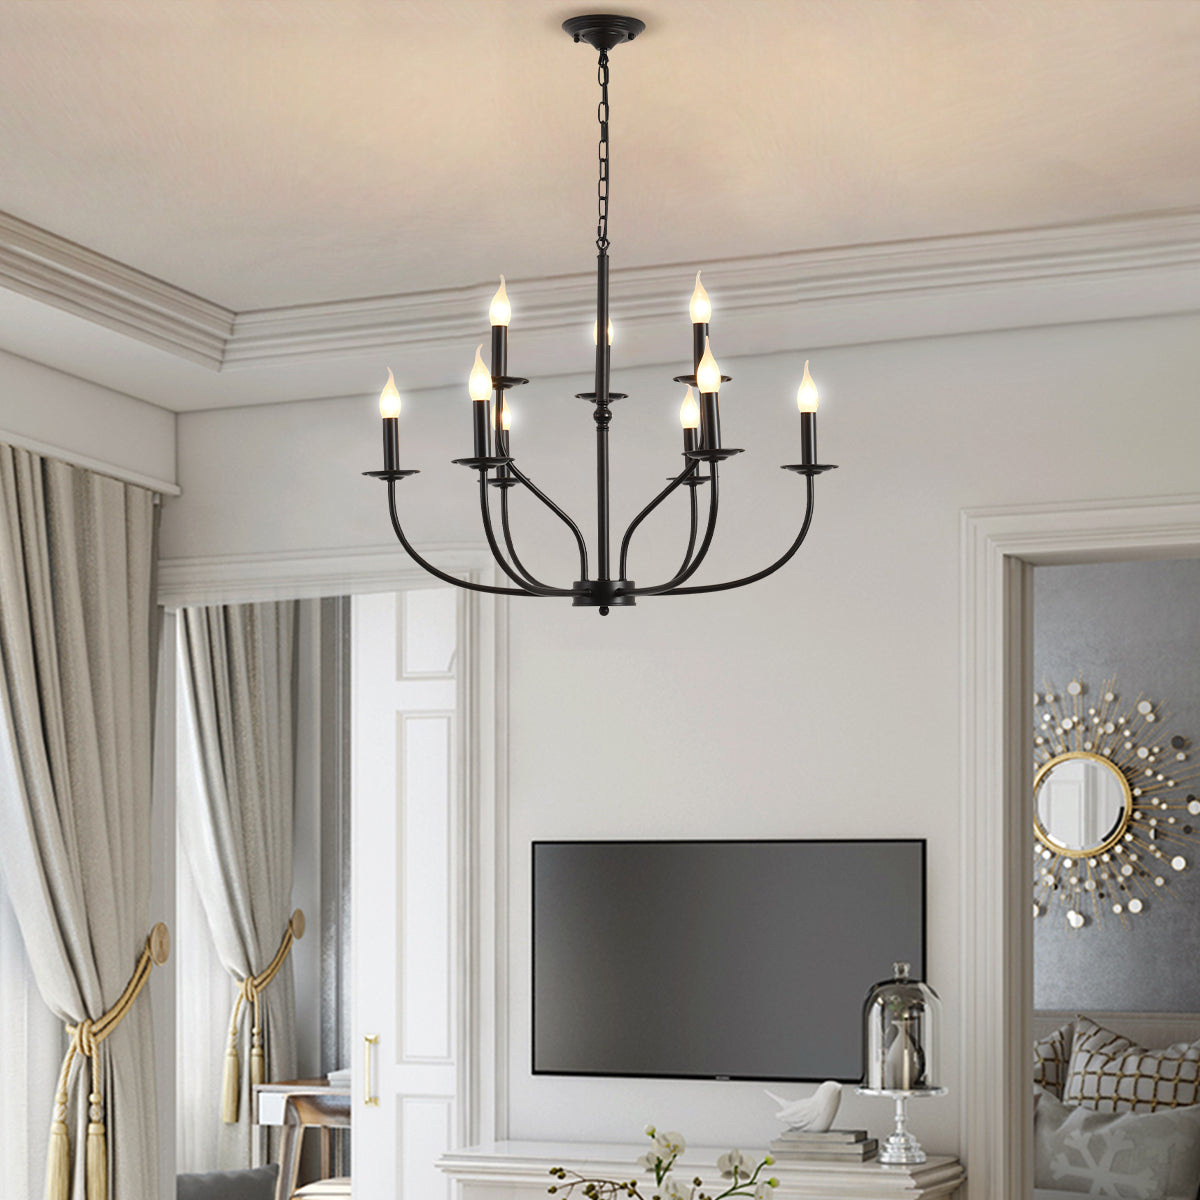 Nine Bulb Classic Black Chandelier shown hung in living room